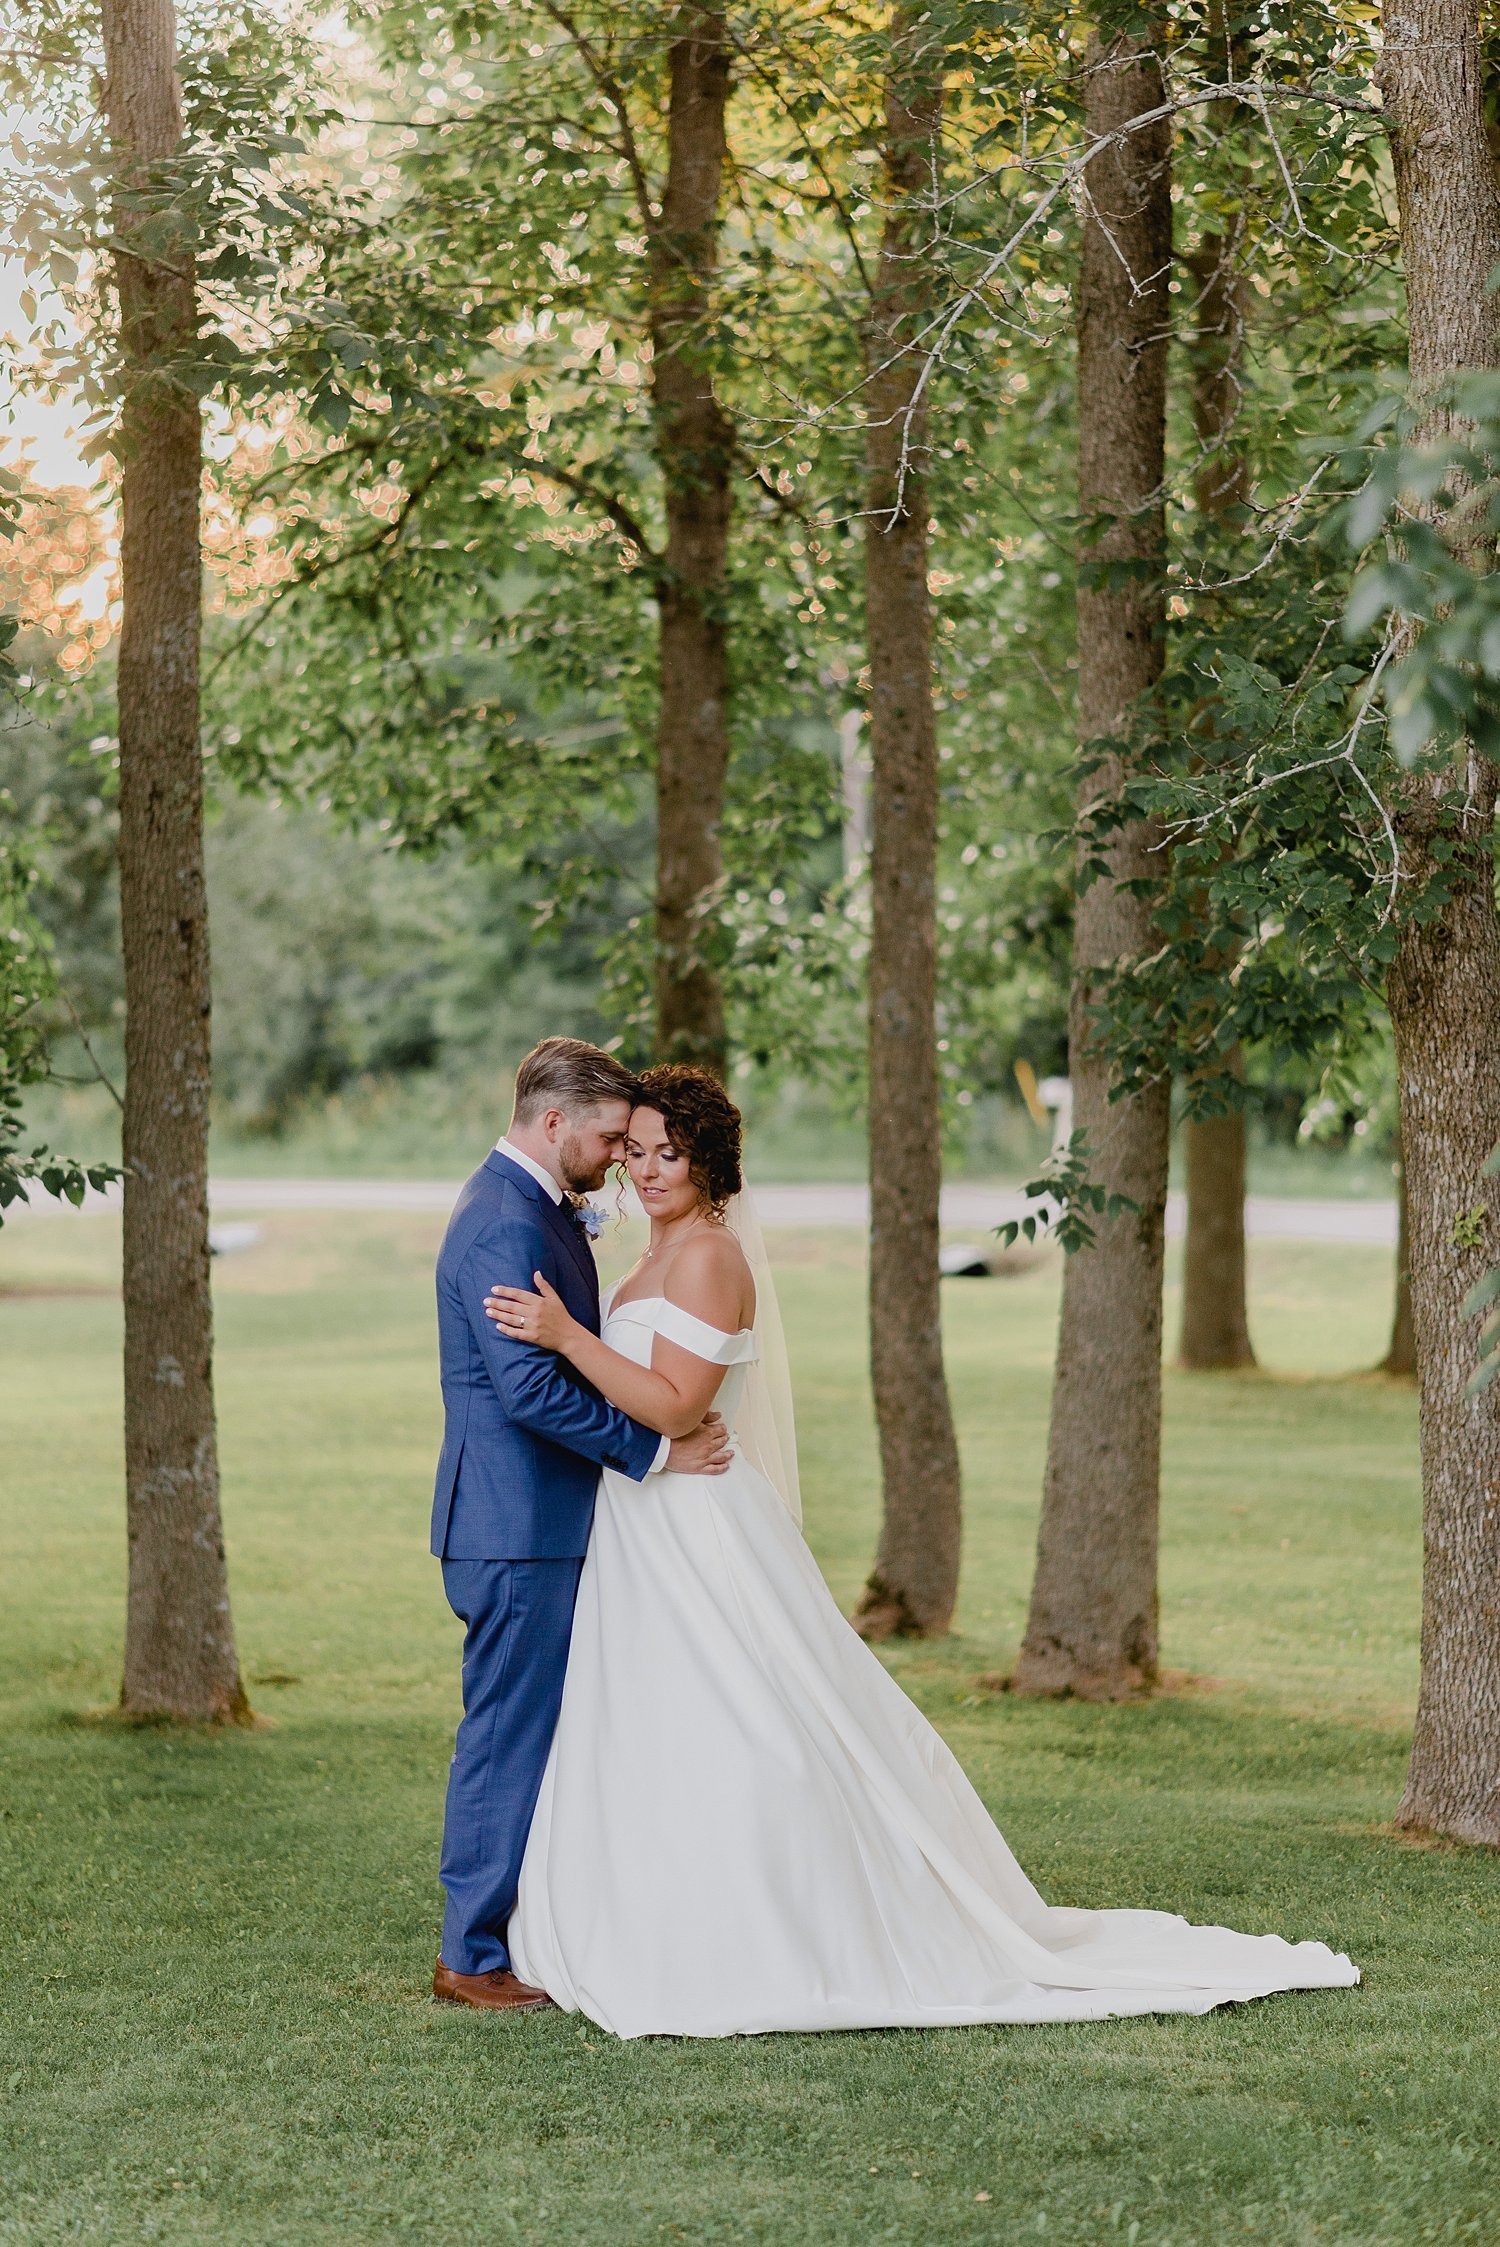 Elegant Summer Backyard Tented Wedding in Sydenham, Ontario | Prince Edward County Wedding Photographer | Holly McMurter Photographs_0093.jpg